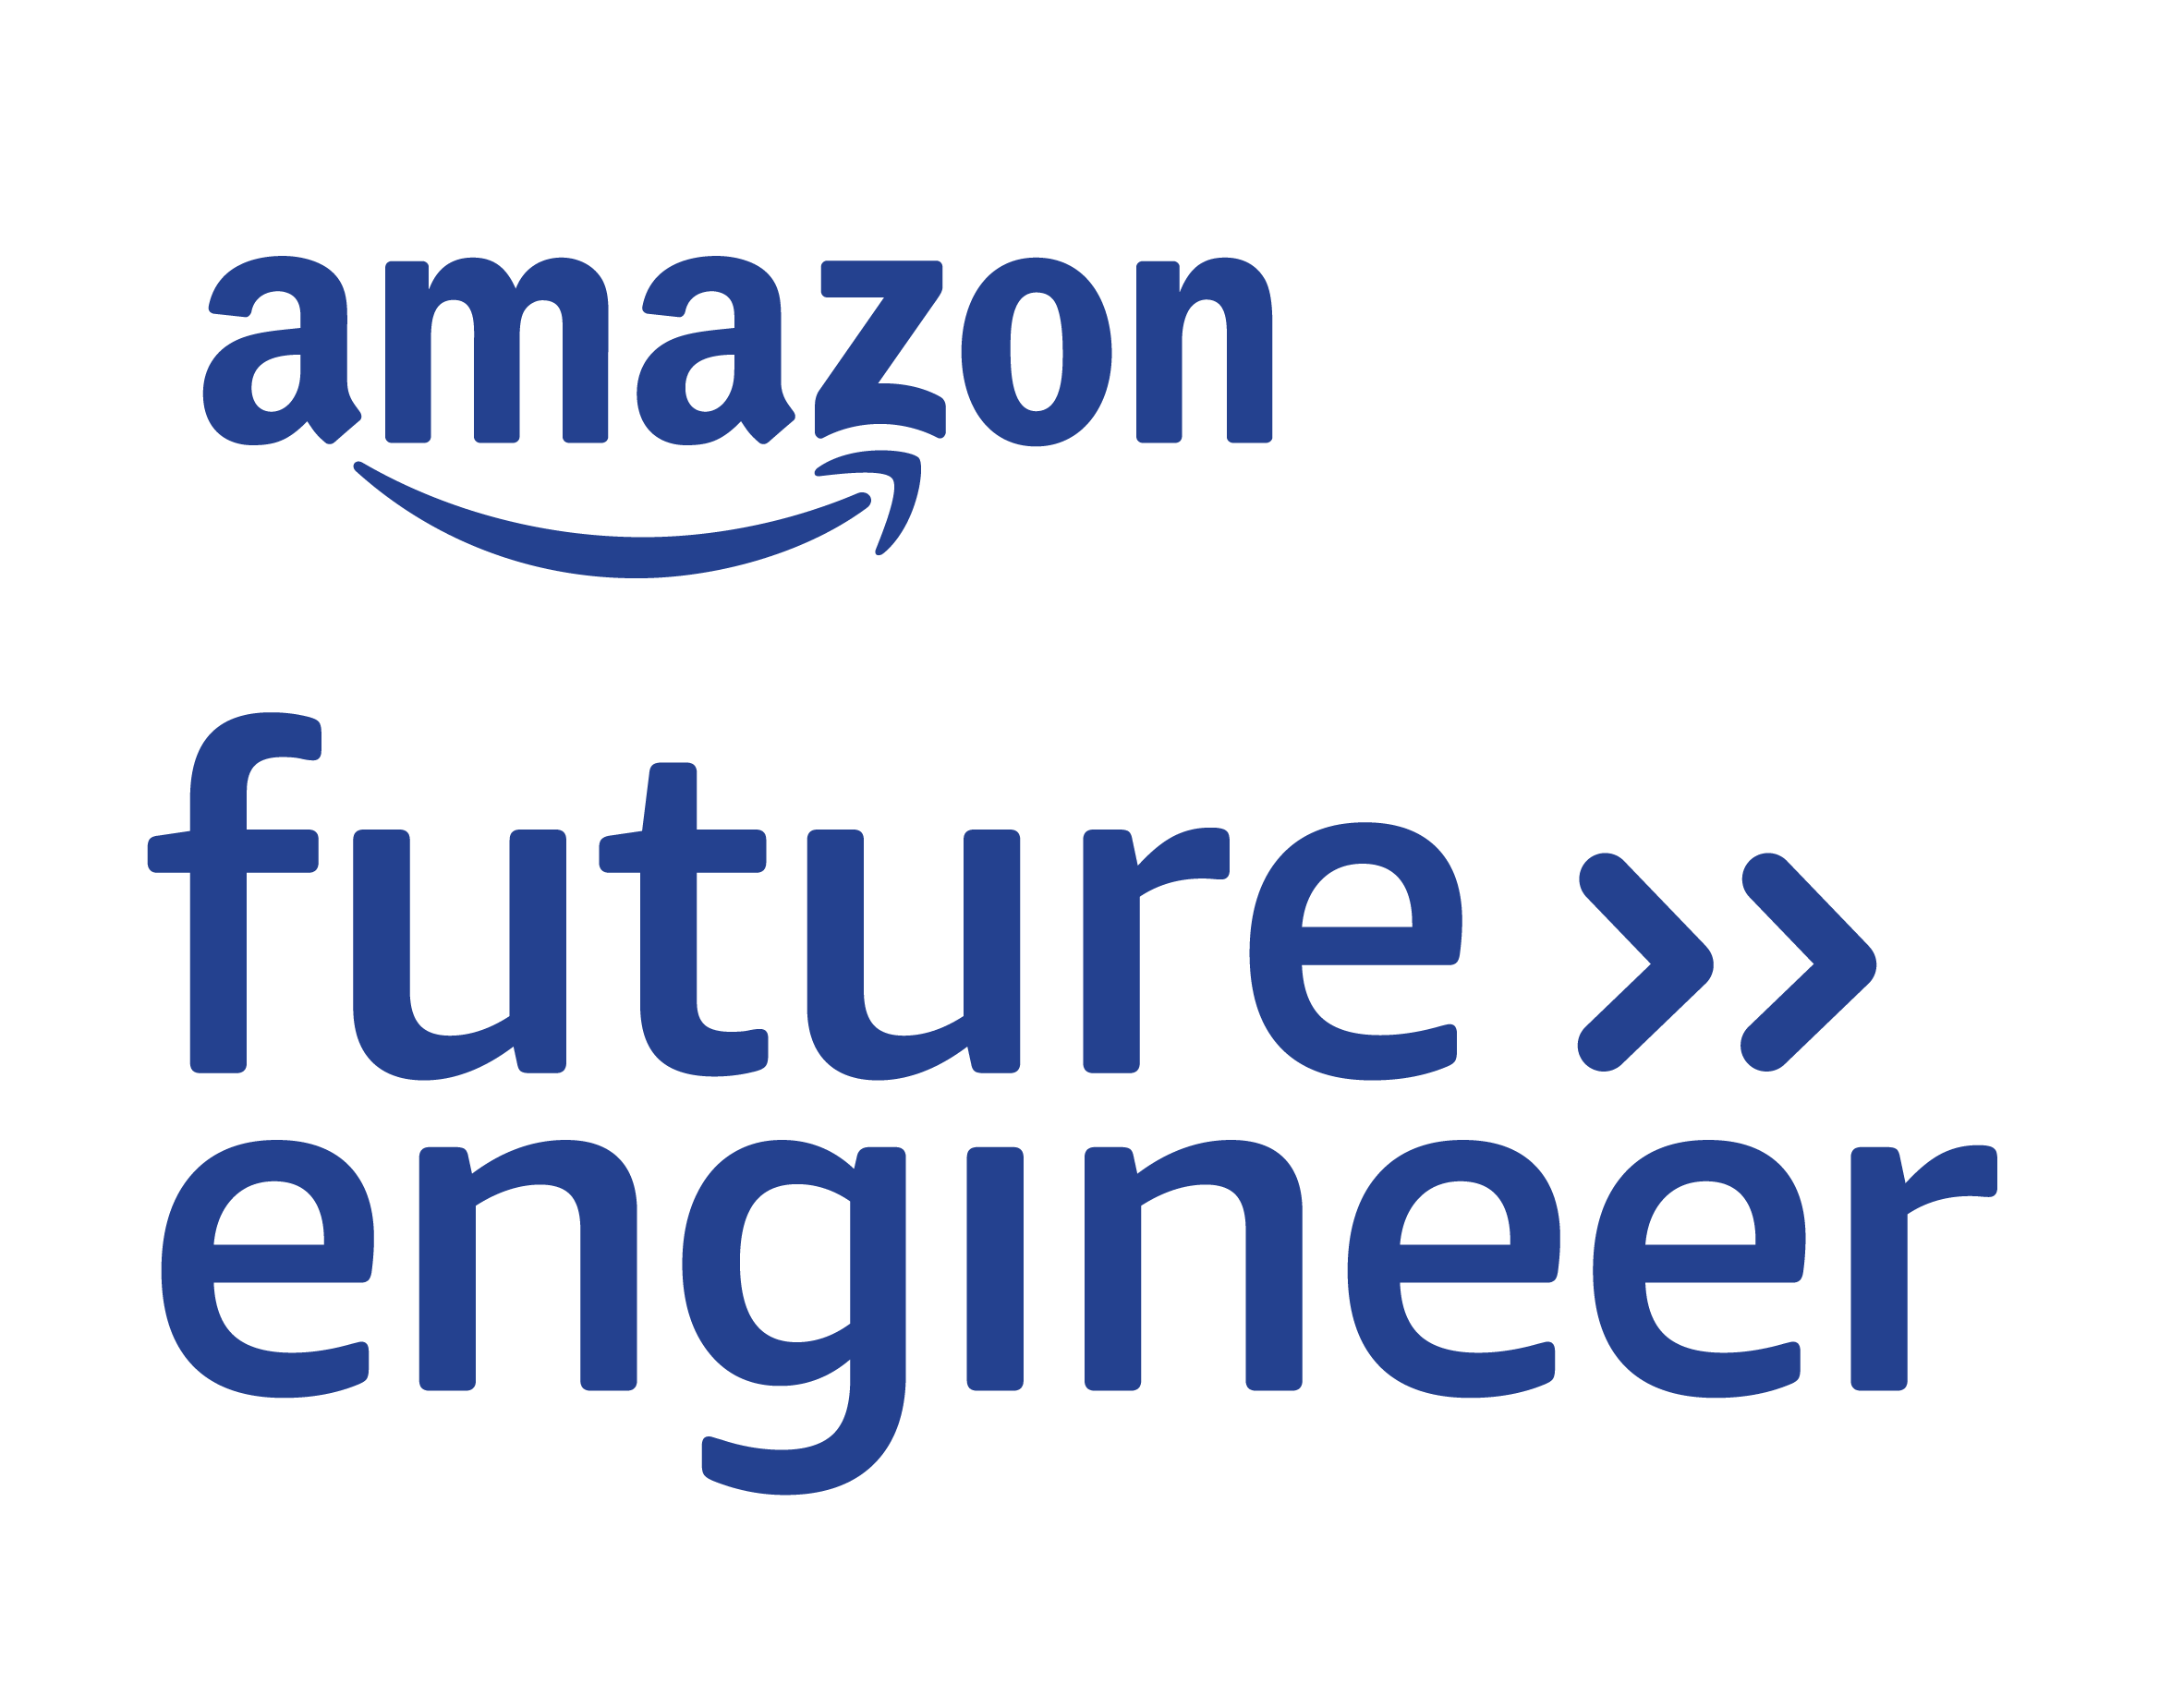 Amazon future engineers